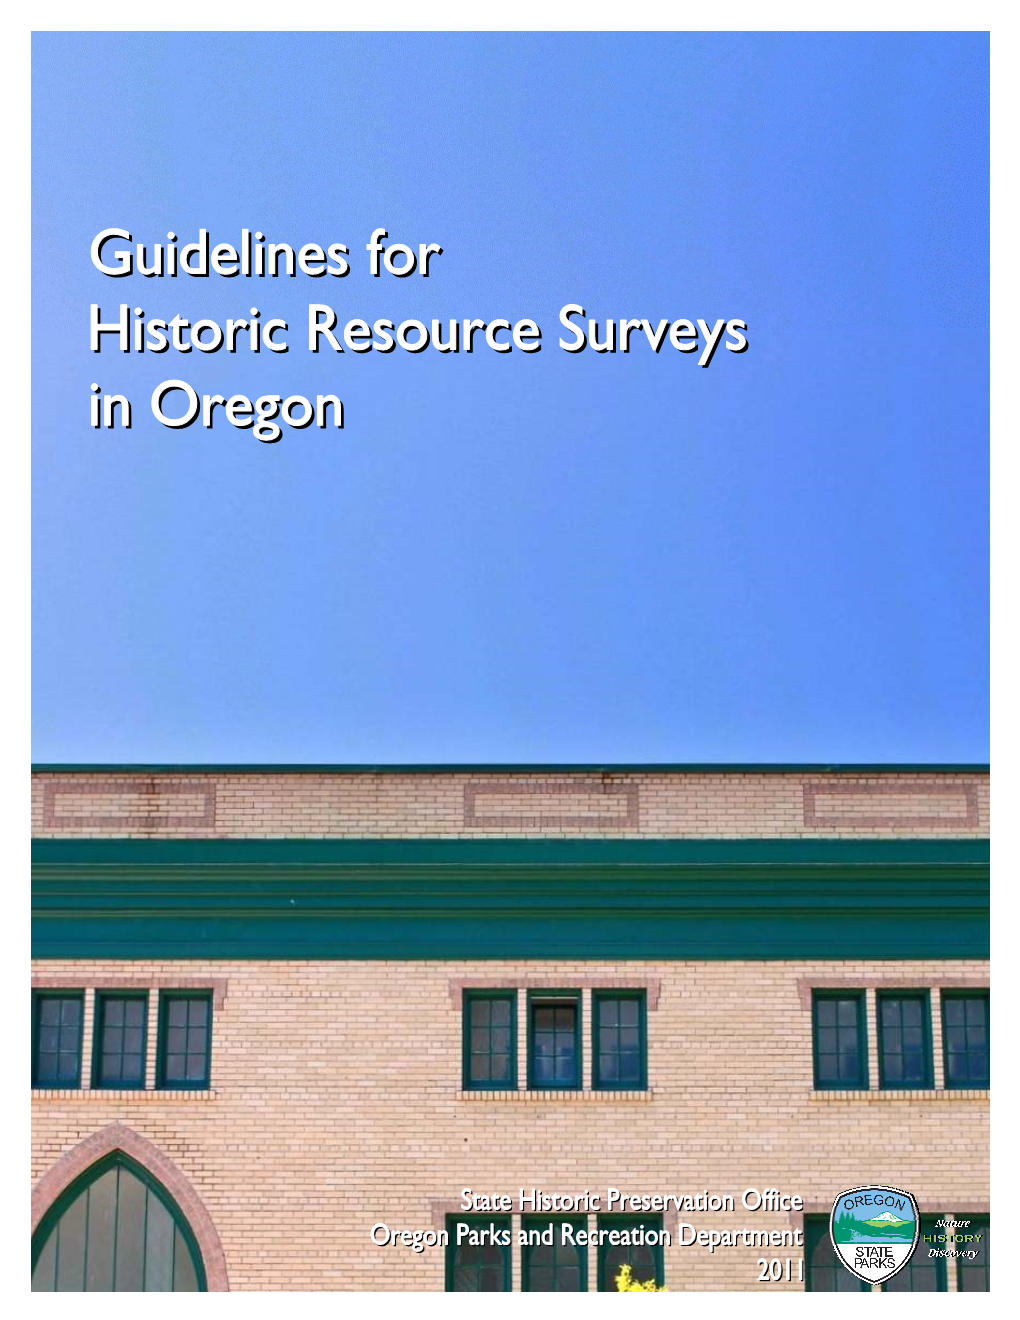 Guidelines for Historic Resource Surveys in Oregon